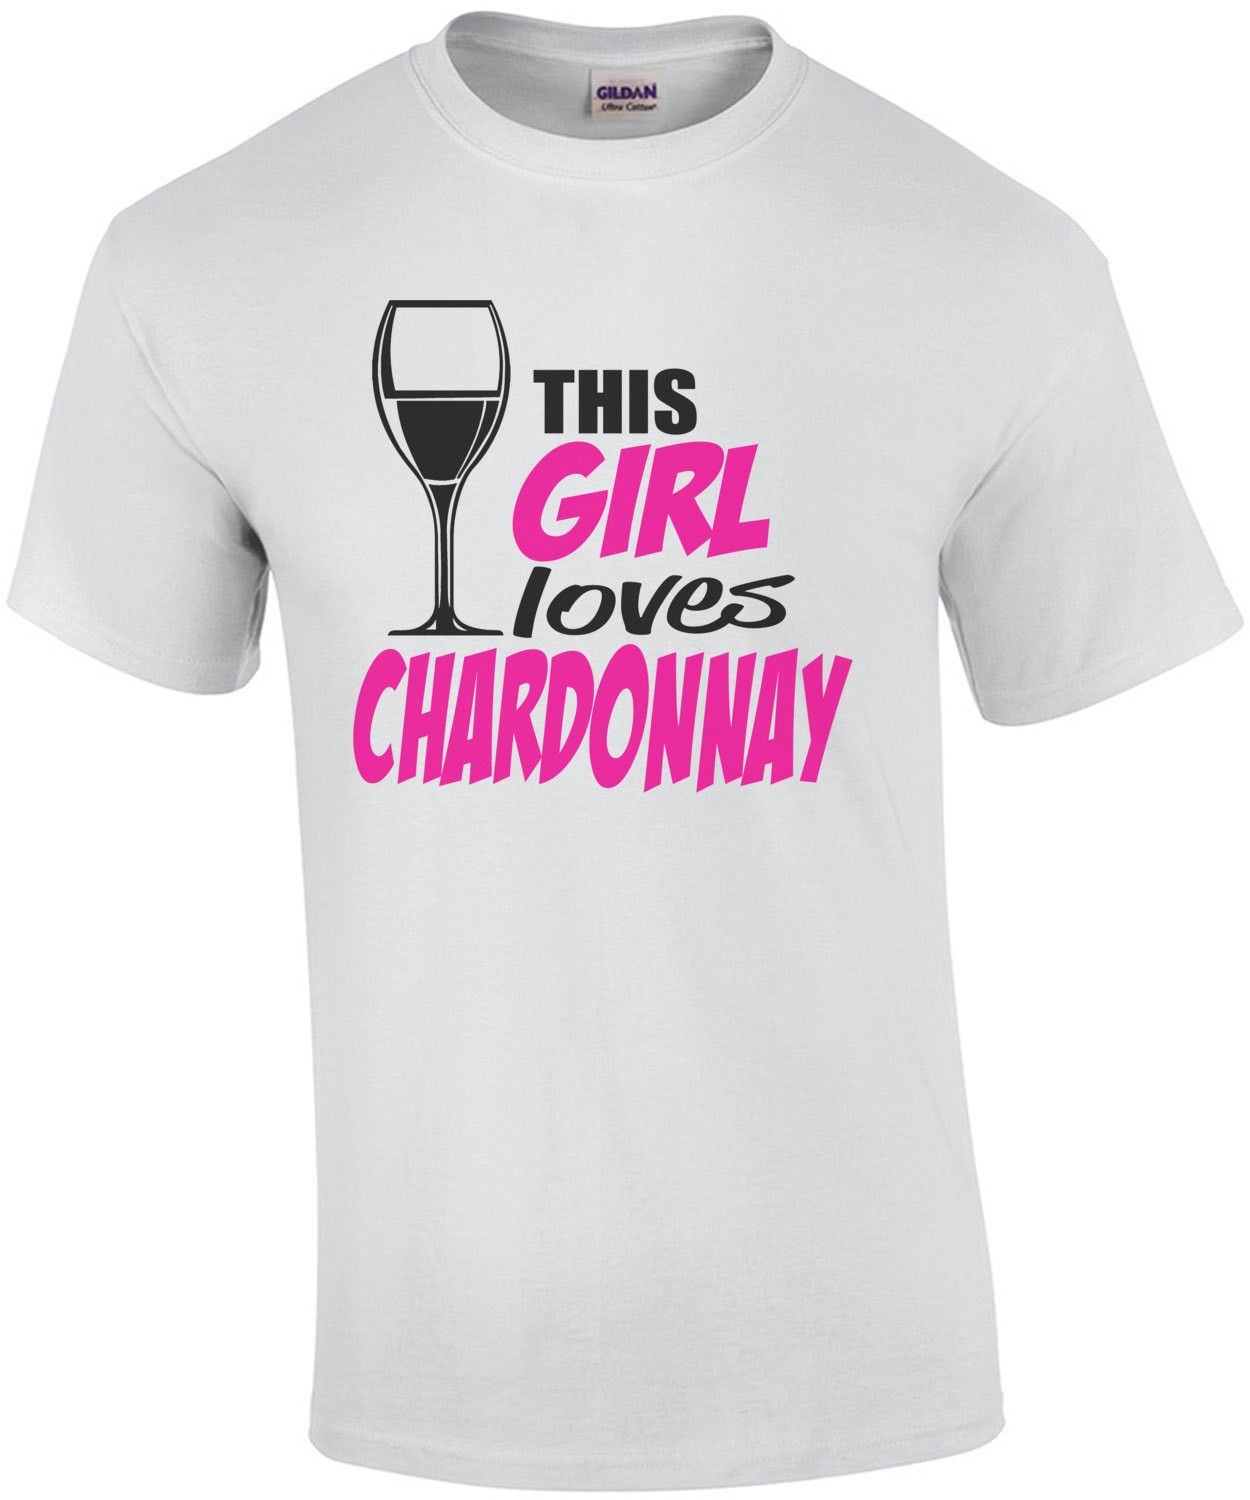 This Girl Loves Chardonnay T-Shirt